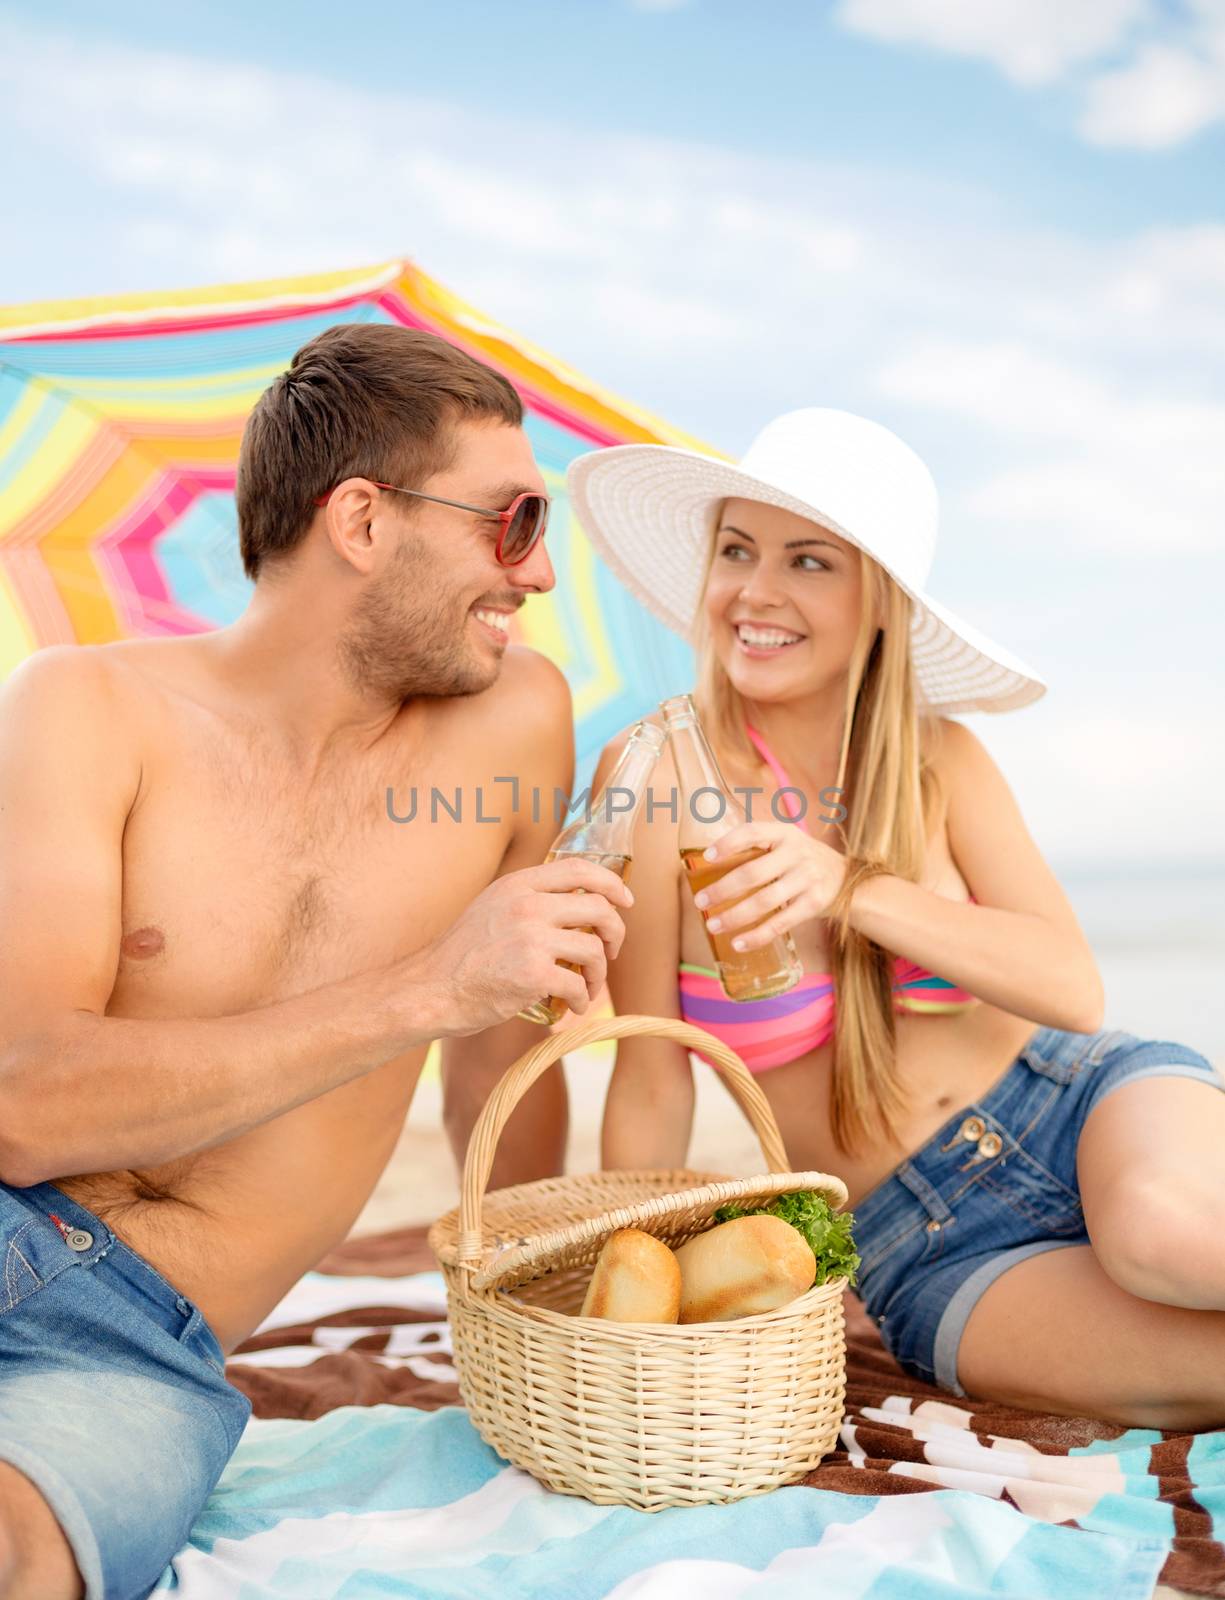 chappy ouple having picnic and sunbathing on beach by dolgachov